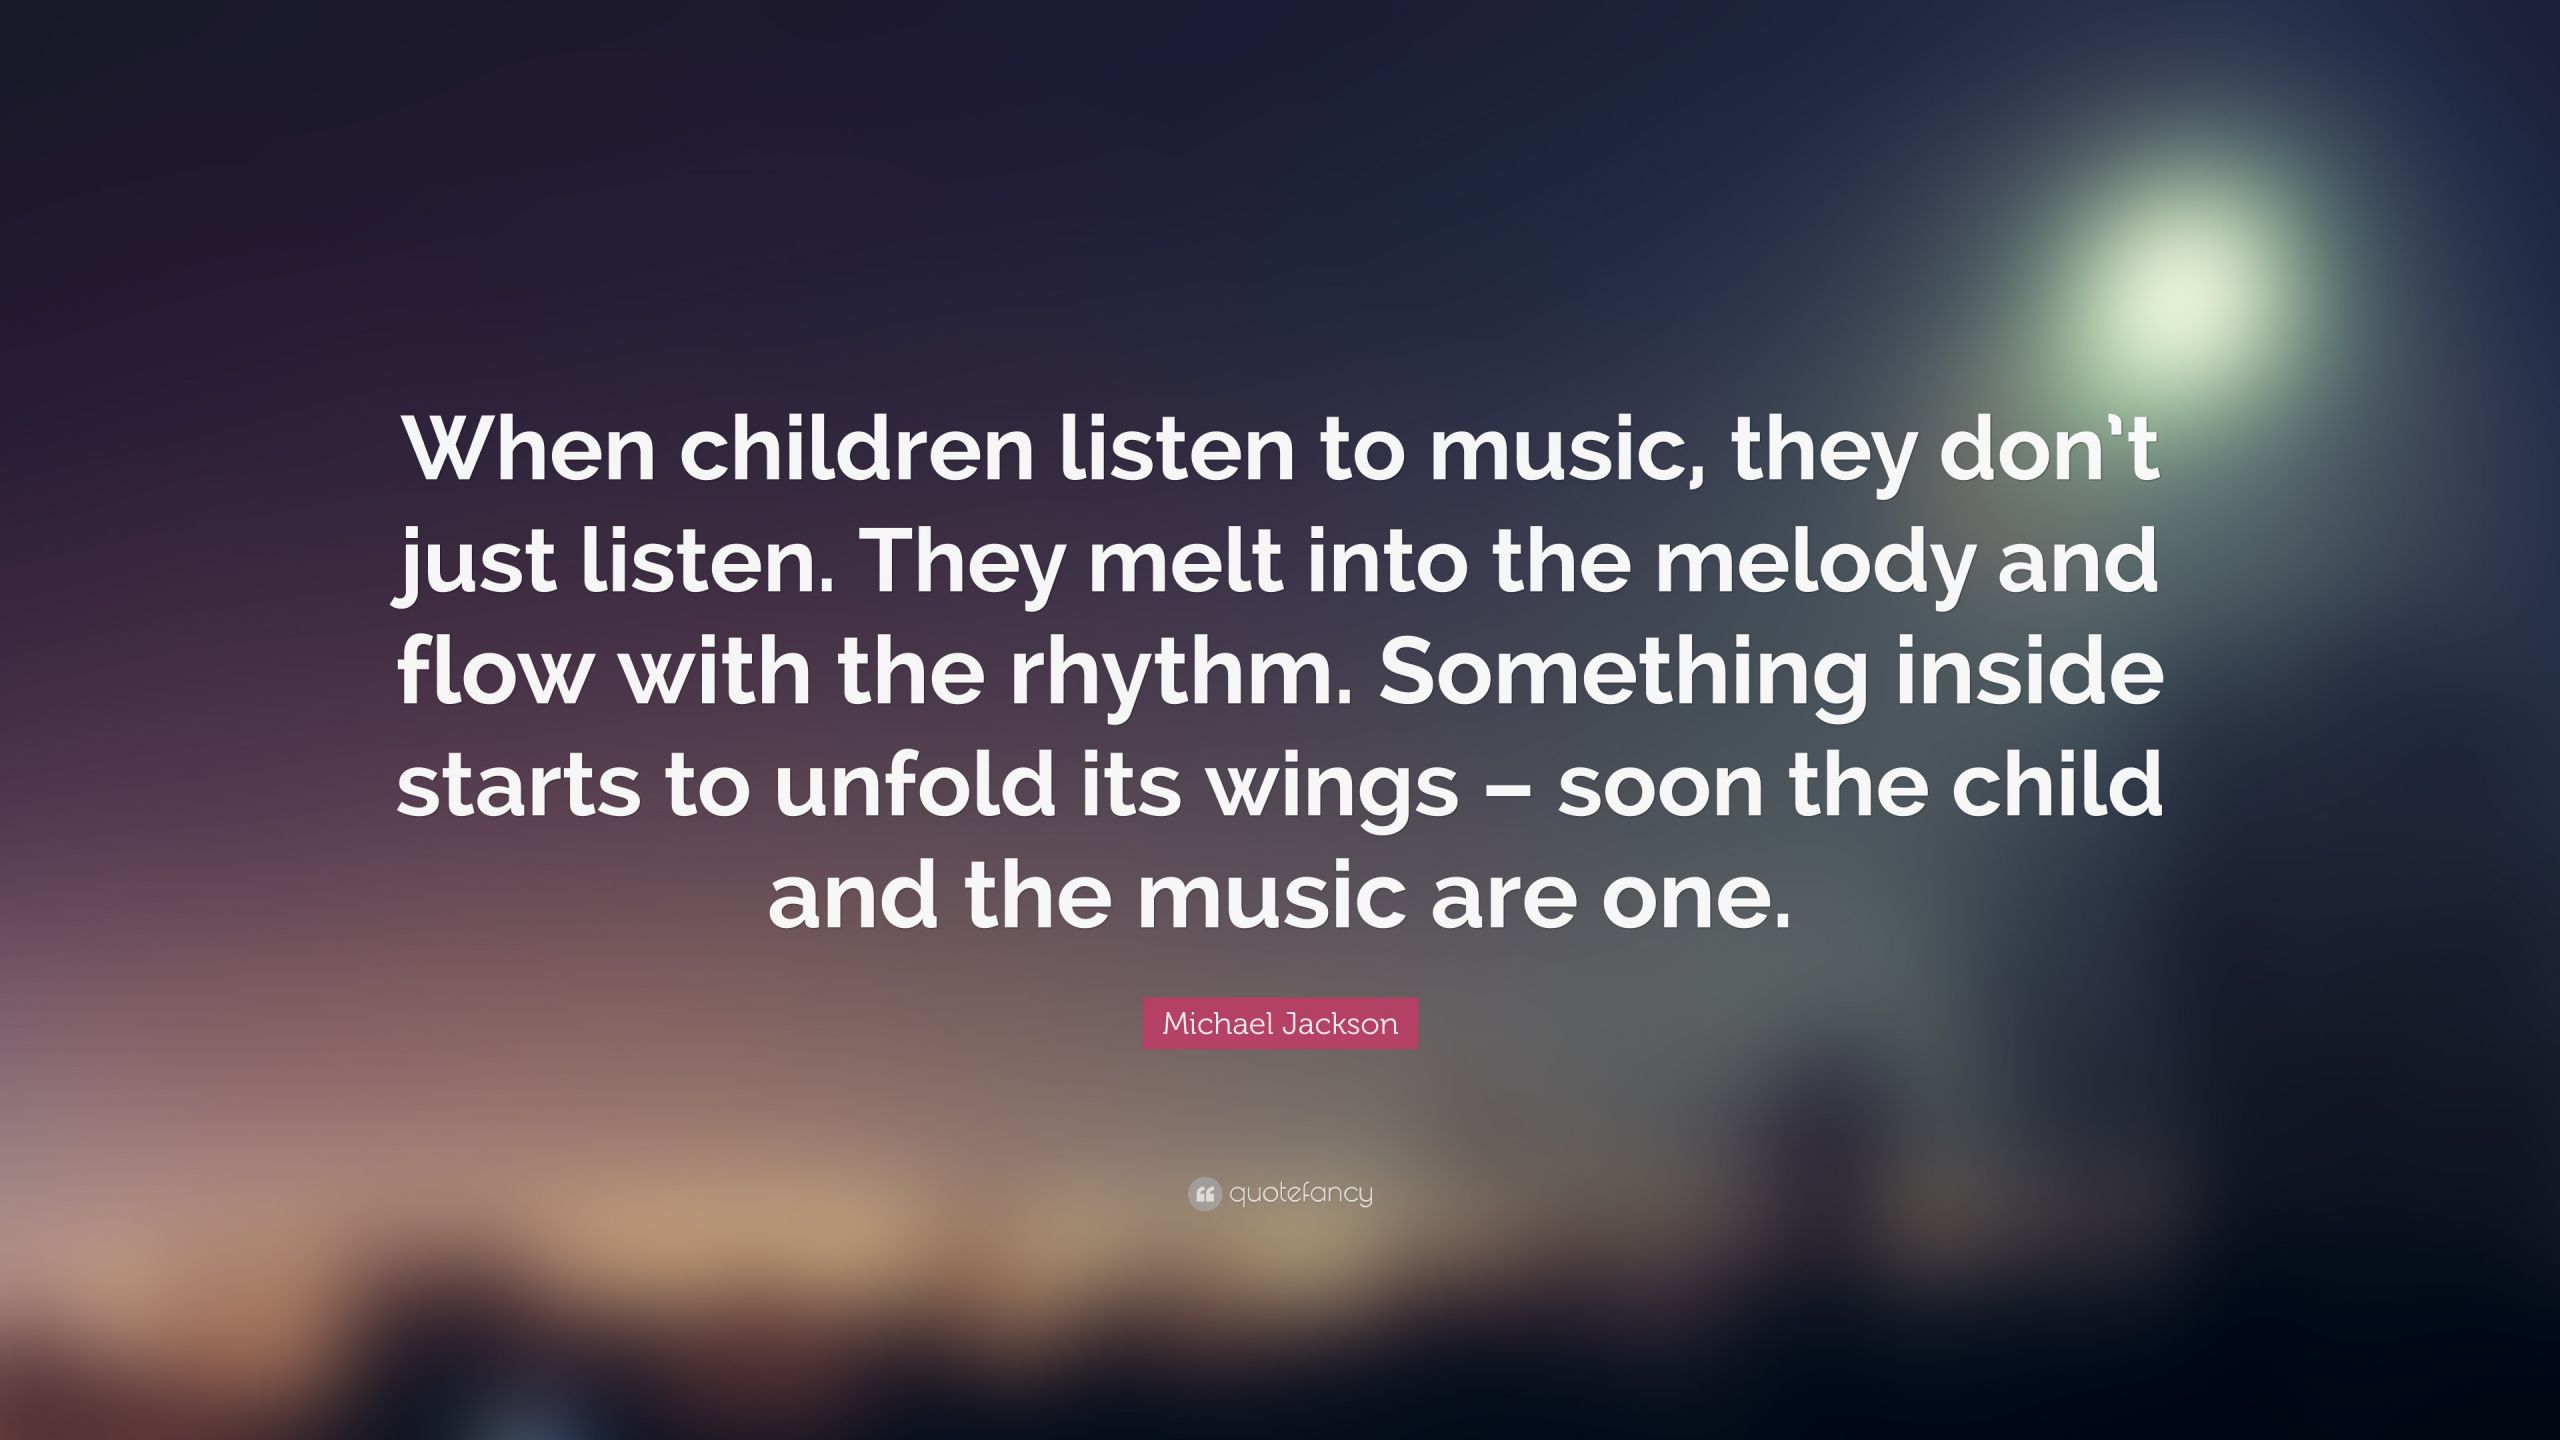 Music Quotes For Children
 Michael Jackson Quote “When children listen to music